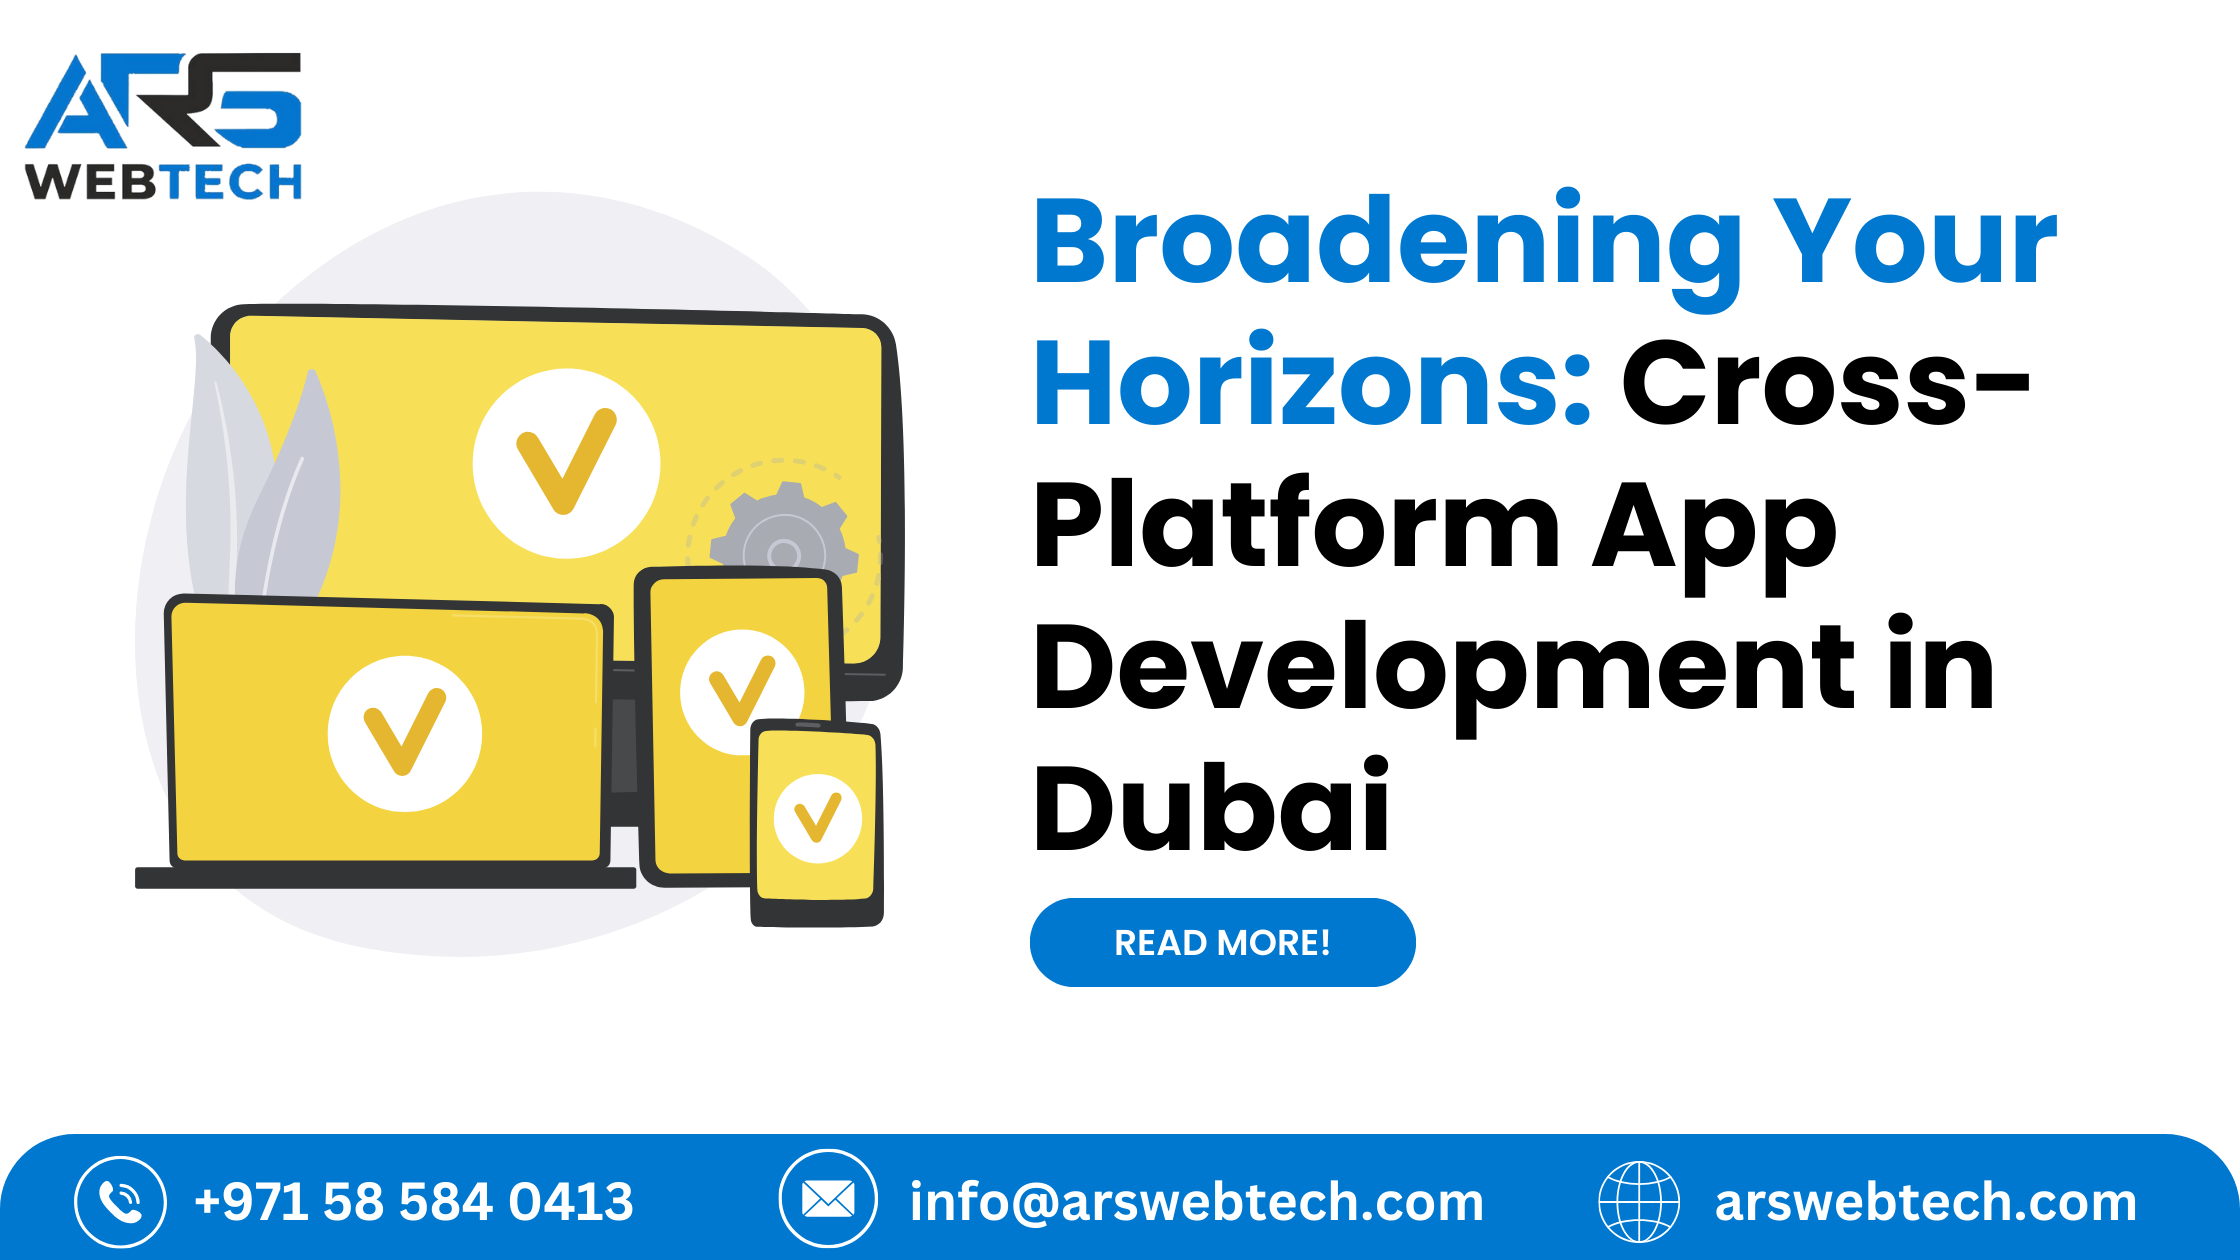 Broadening Your Horizons: Cross-Platform App Development in Dubai